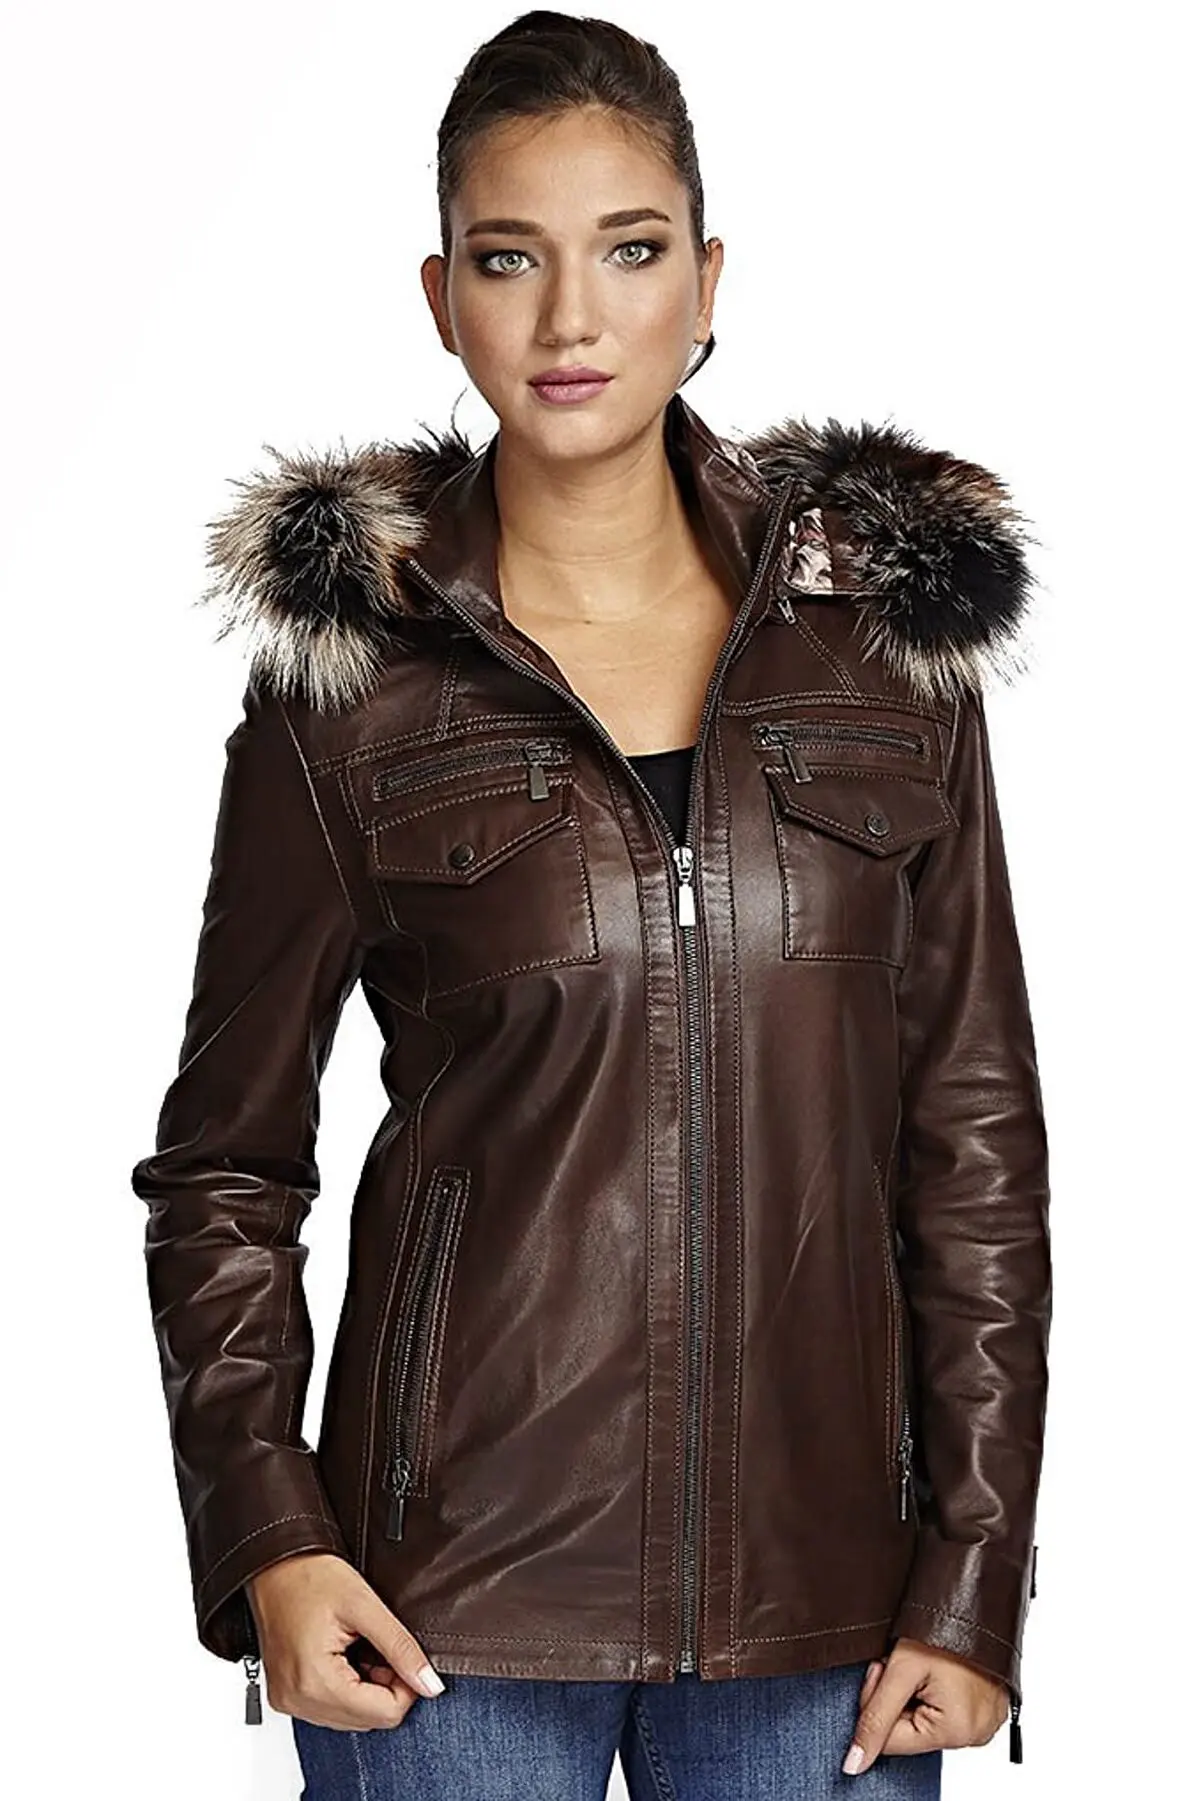 Women Leather Jacket Genuine Sheepskin Design Coat Waterproof New Year Fashion Leather Products From Turkey Hooded Parka